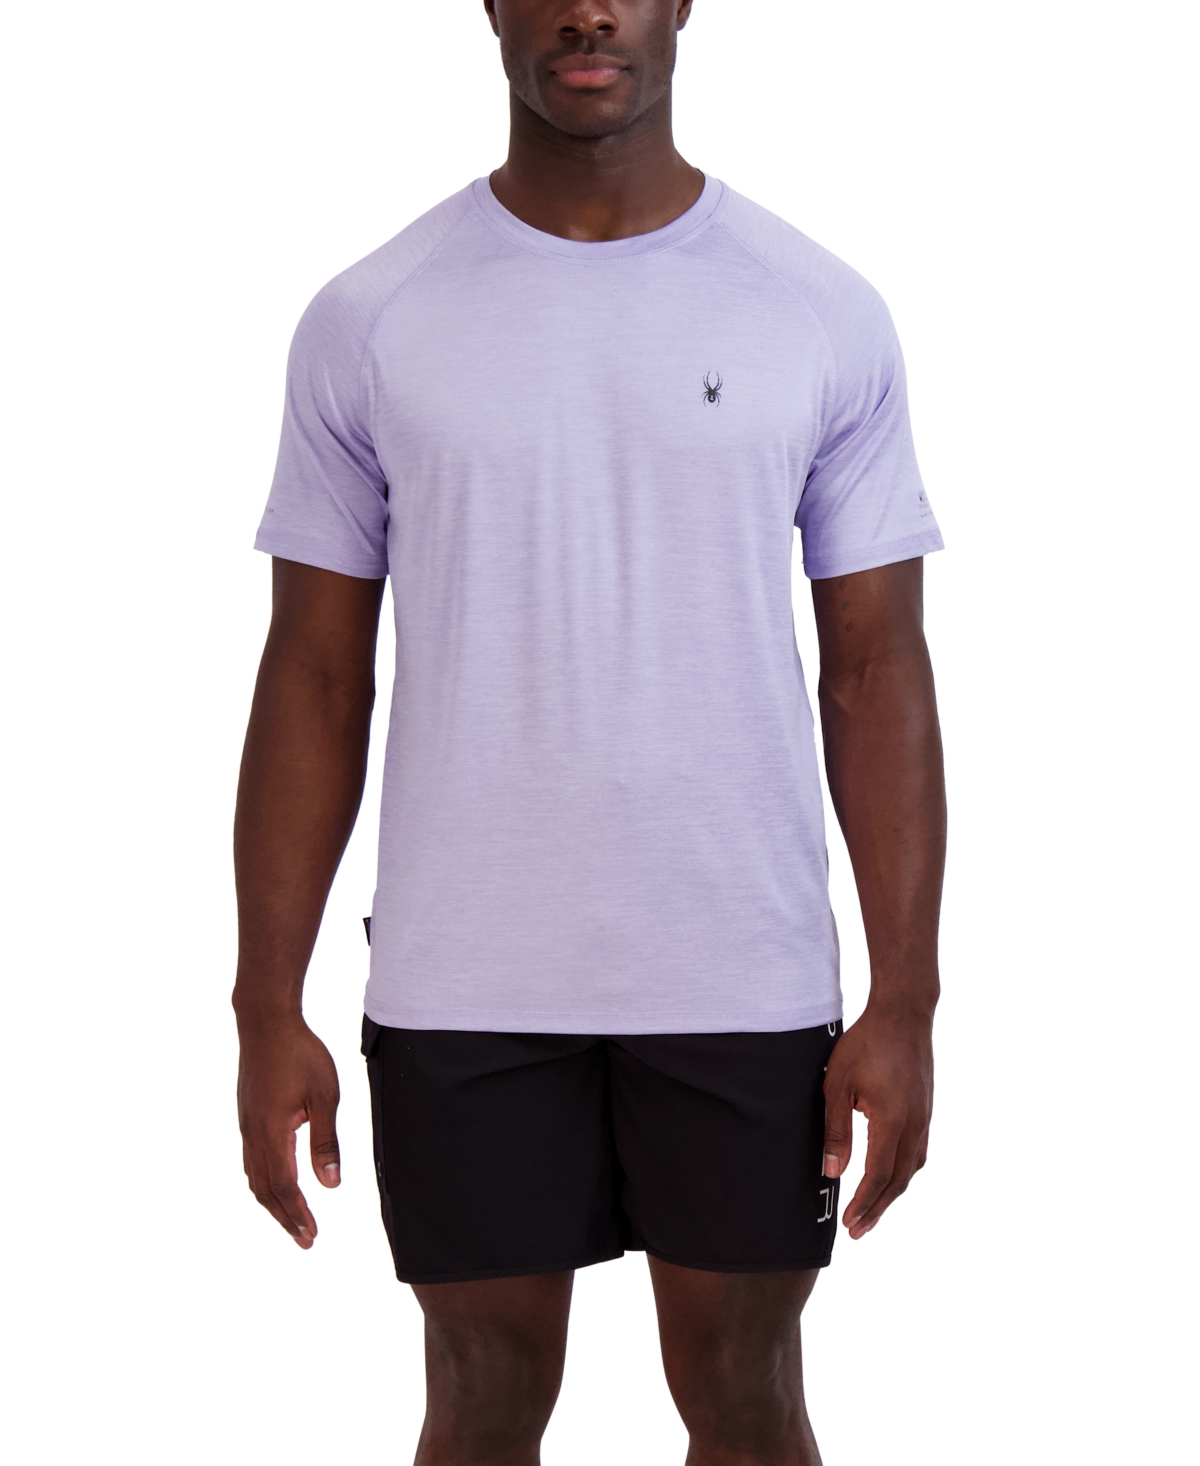 Spyder Men's Standard Short Sleeves Rashguard T-shirt In Wish